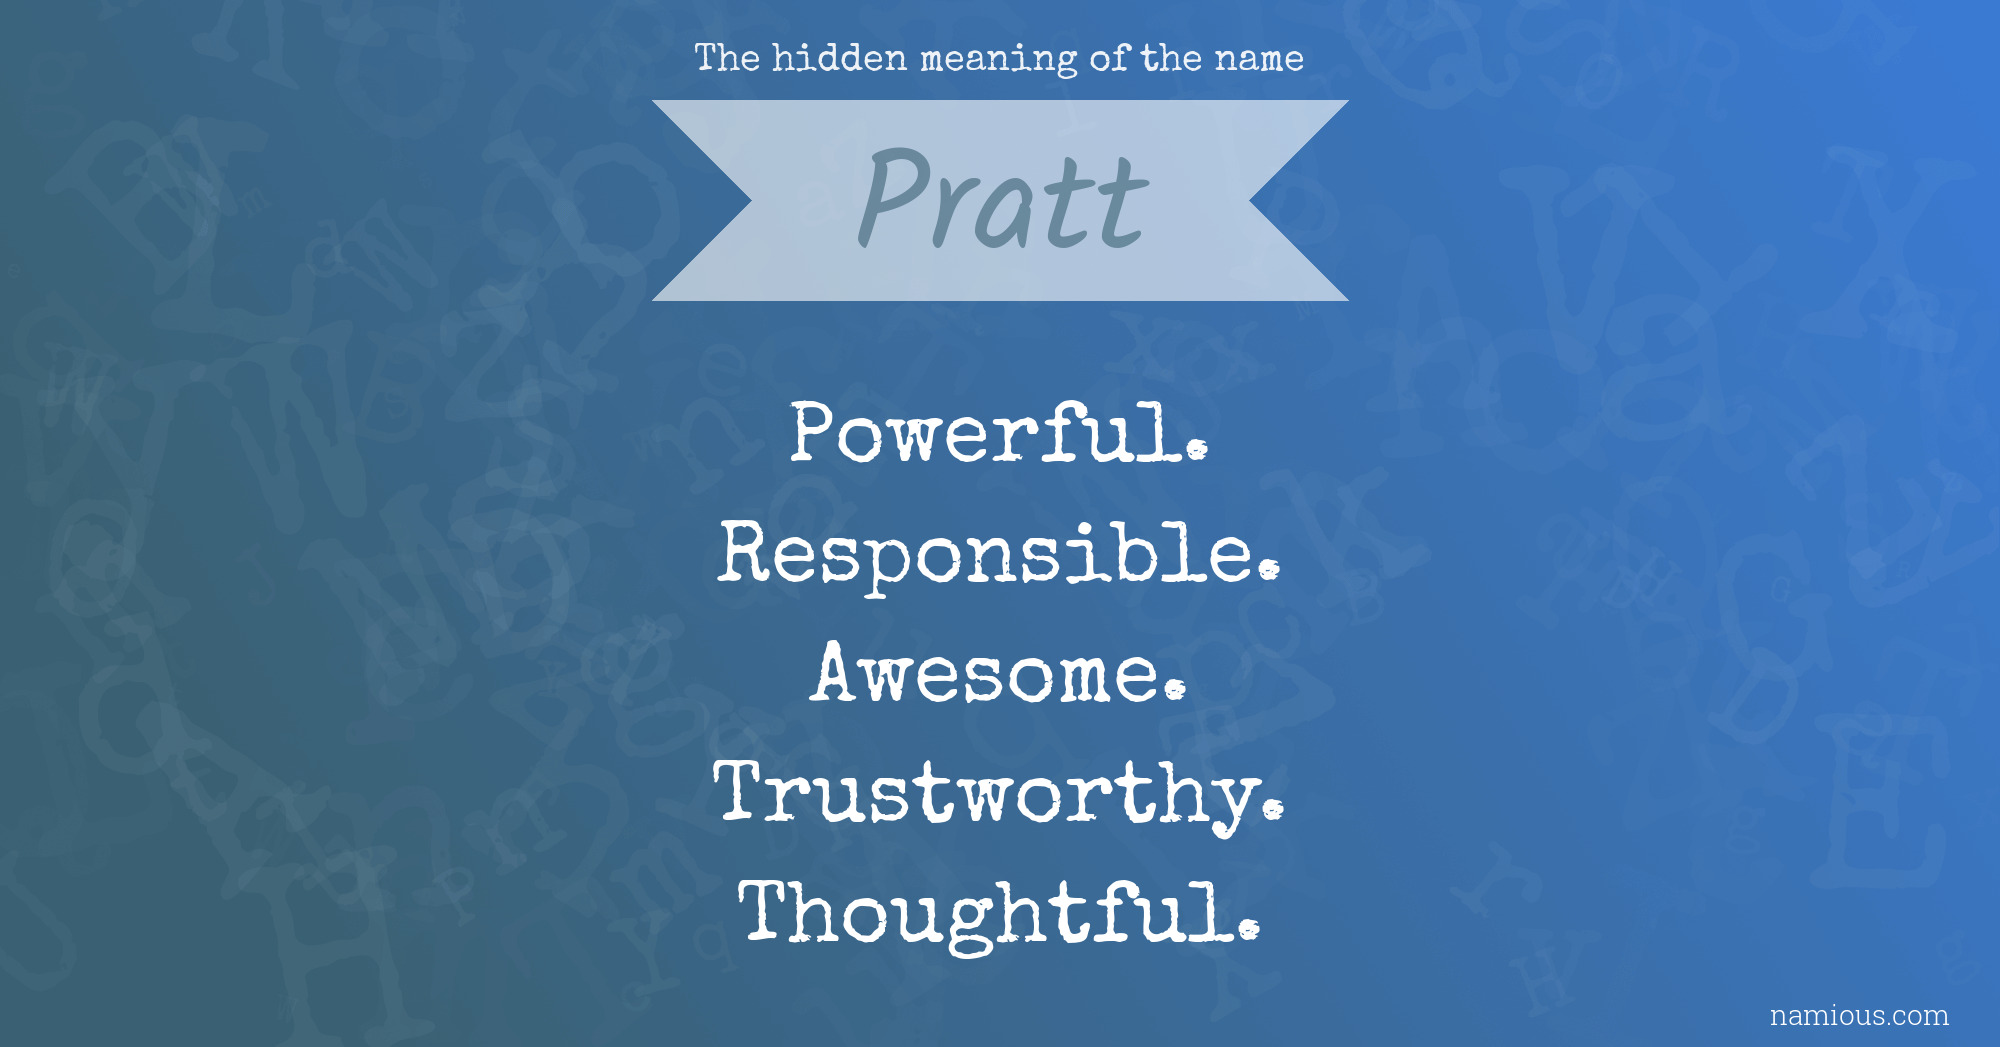 The hidden meaning of the name Pratt